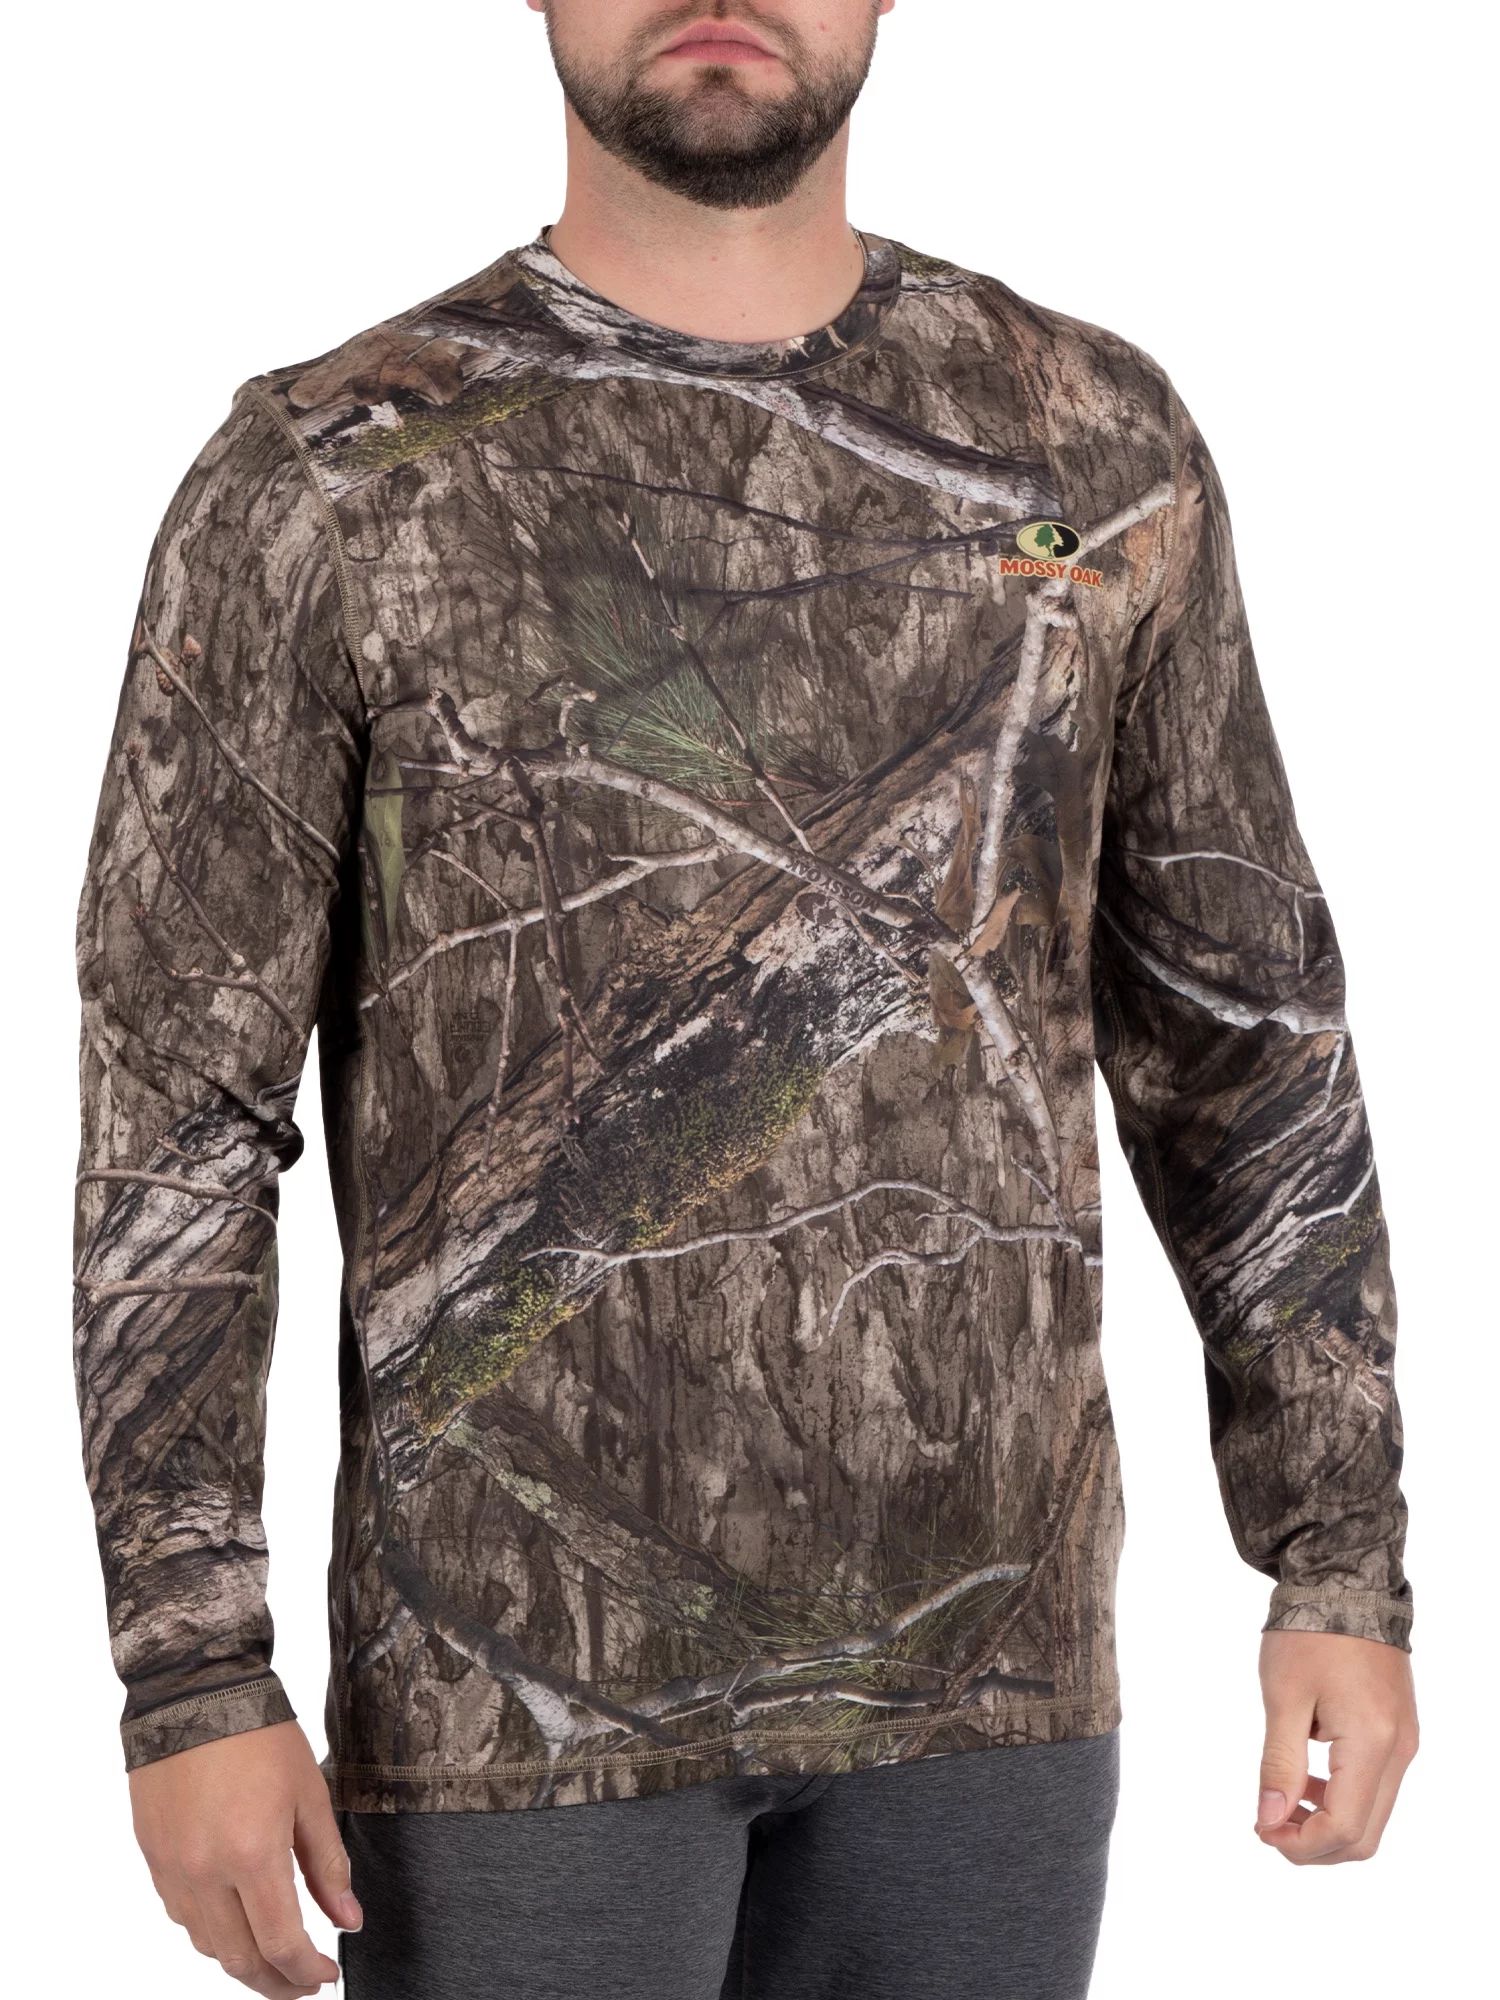 Men's Long Sleeve Camo Tee Hunting Performance Shirt by Mossy Oak, Sizes S-3XL | Walmart (US)